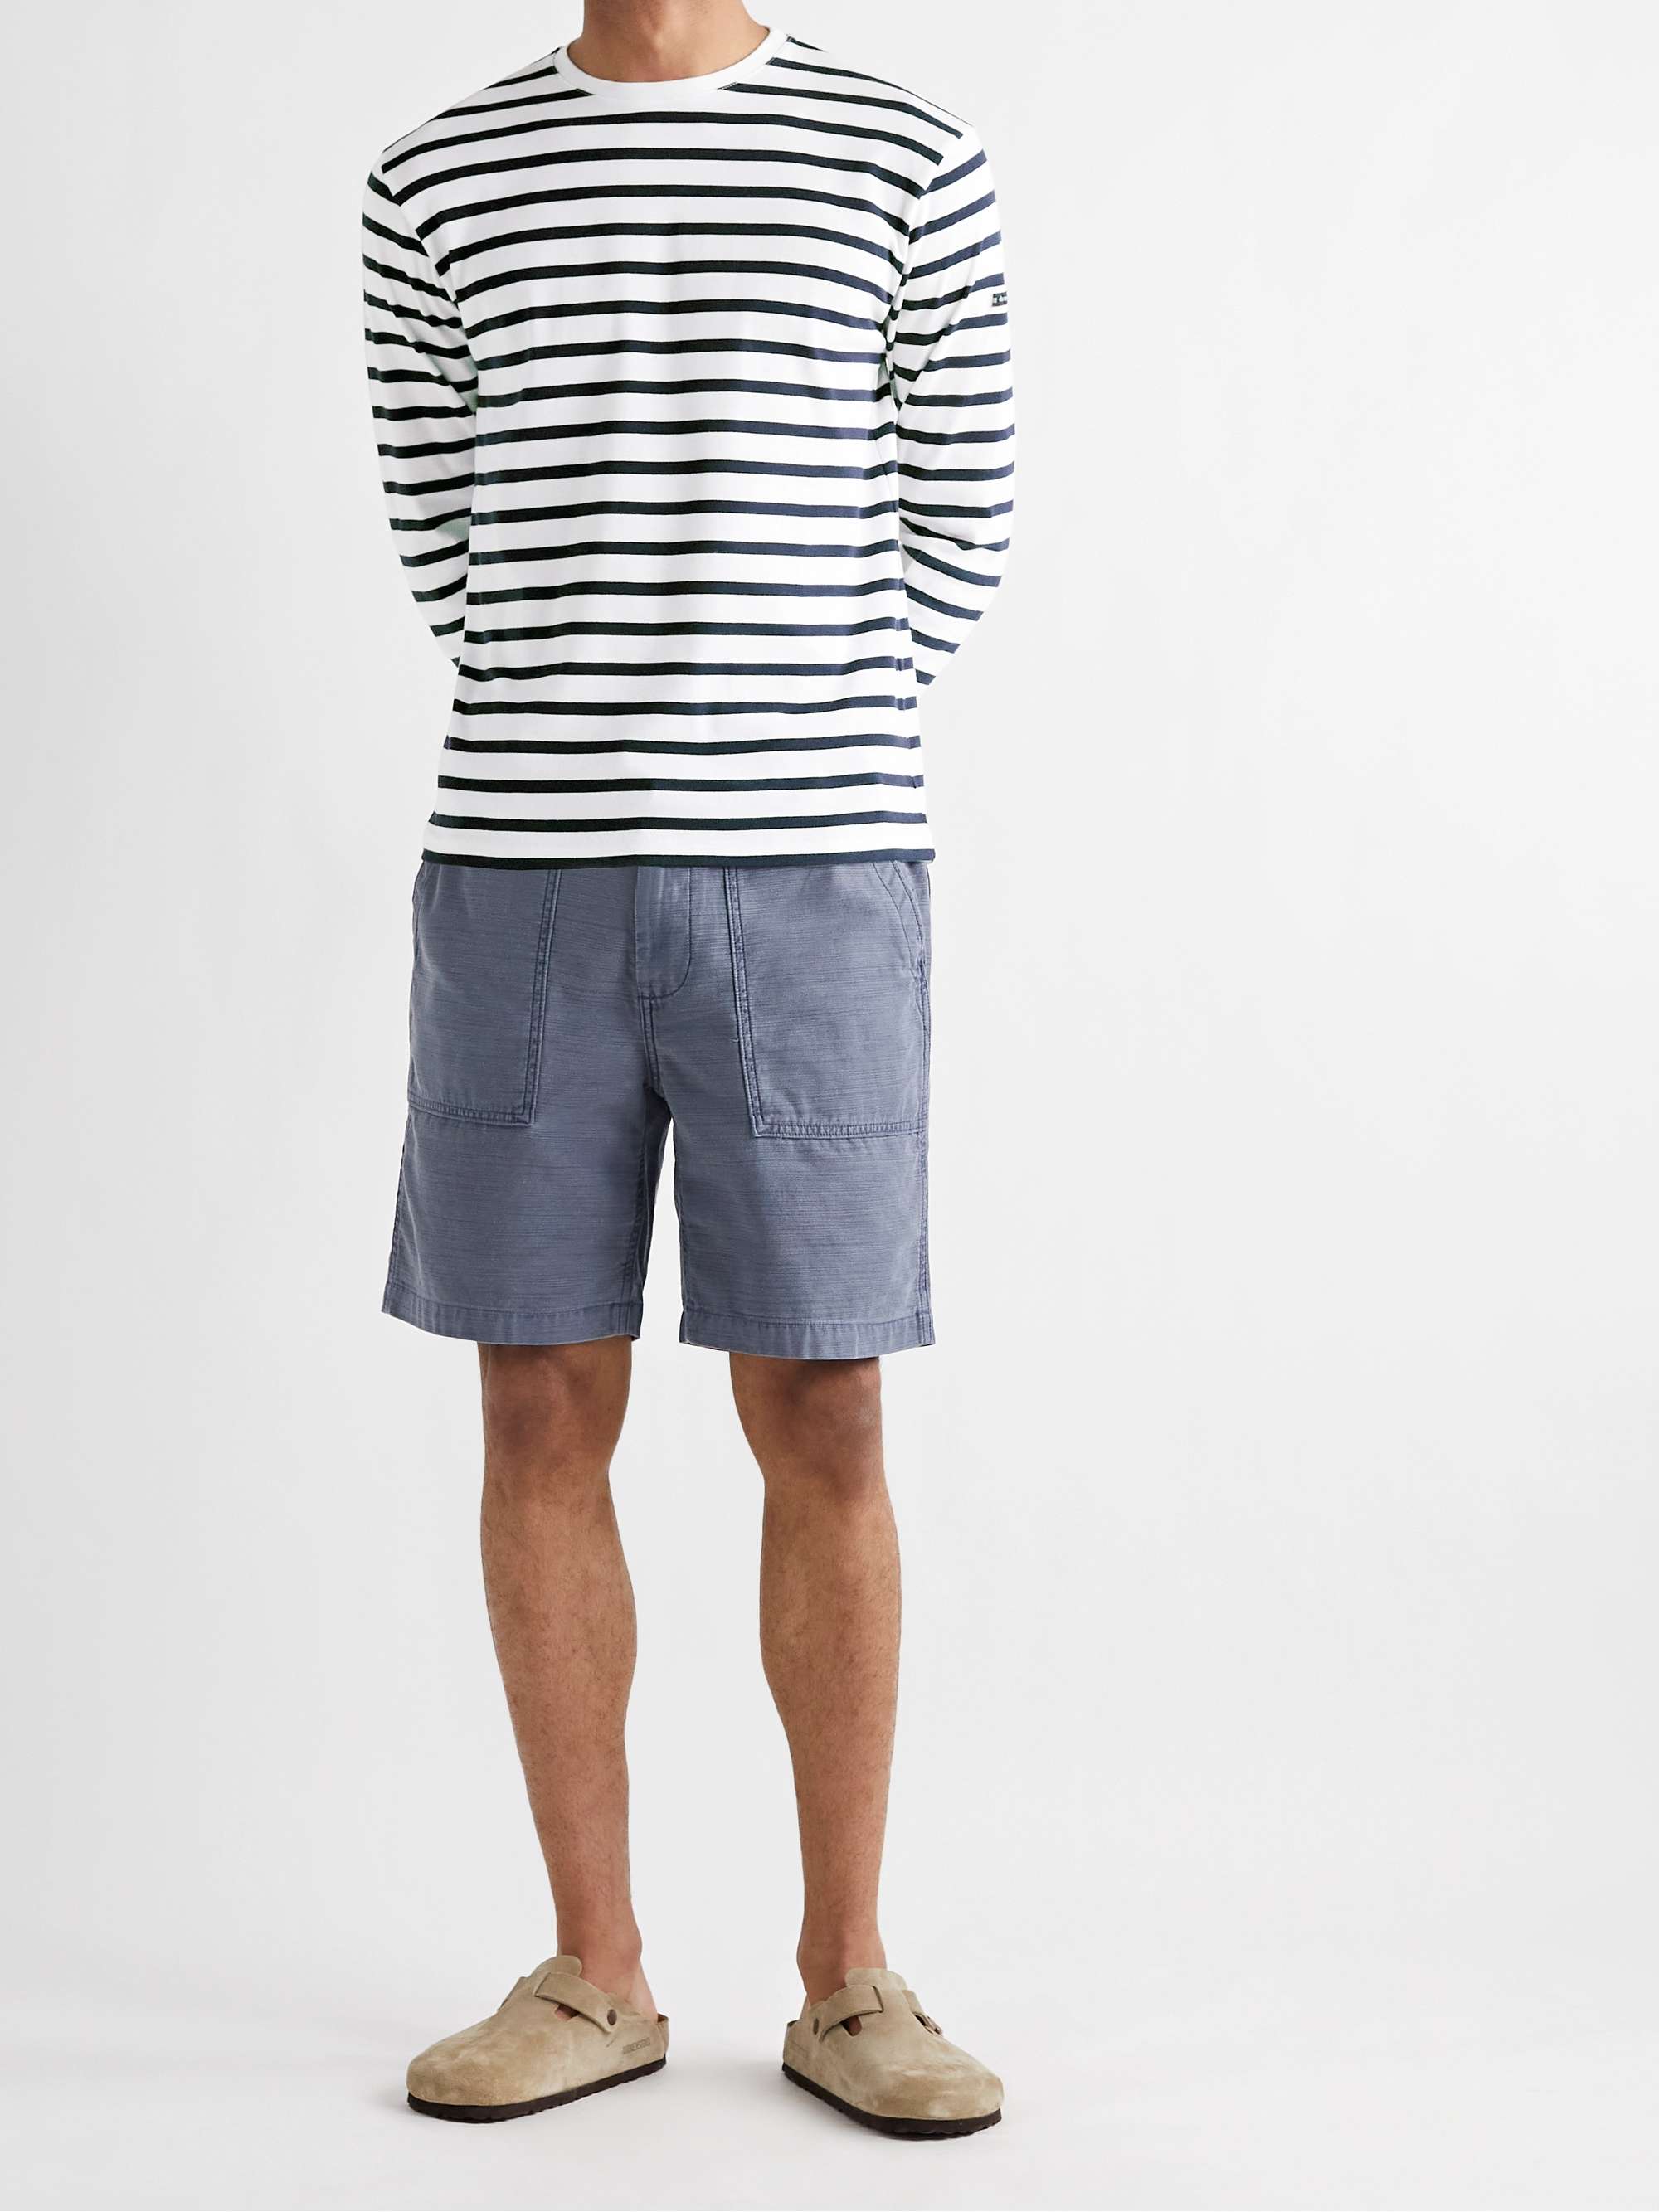 White Slim-Fit Striped Cotton-Jersey T-Shirt | ARMOR-LUX | MR PORTER